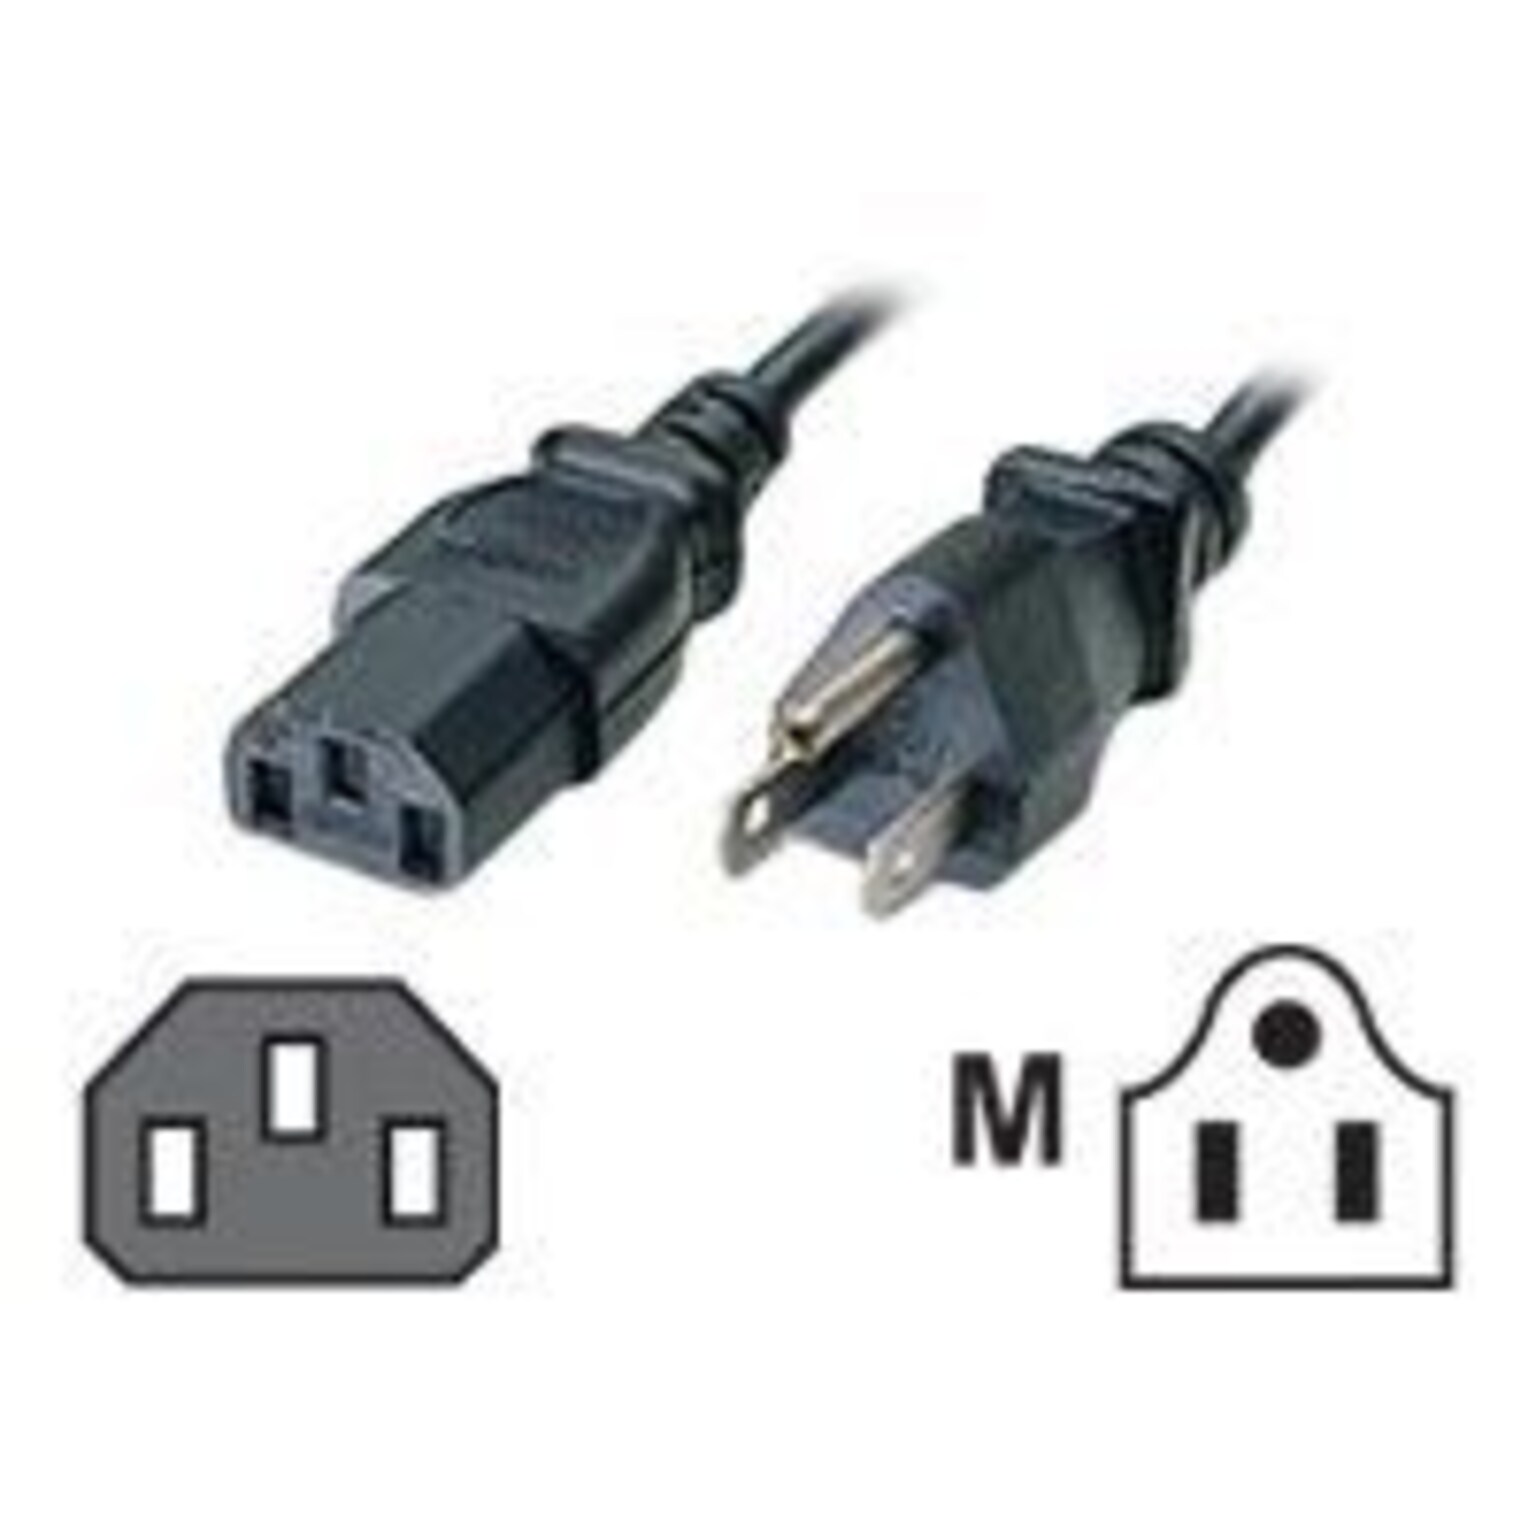 C2G 03130 6 NEMA 5-15P to IEC320C13 Male/Female Universal Power Cord, Black